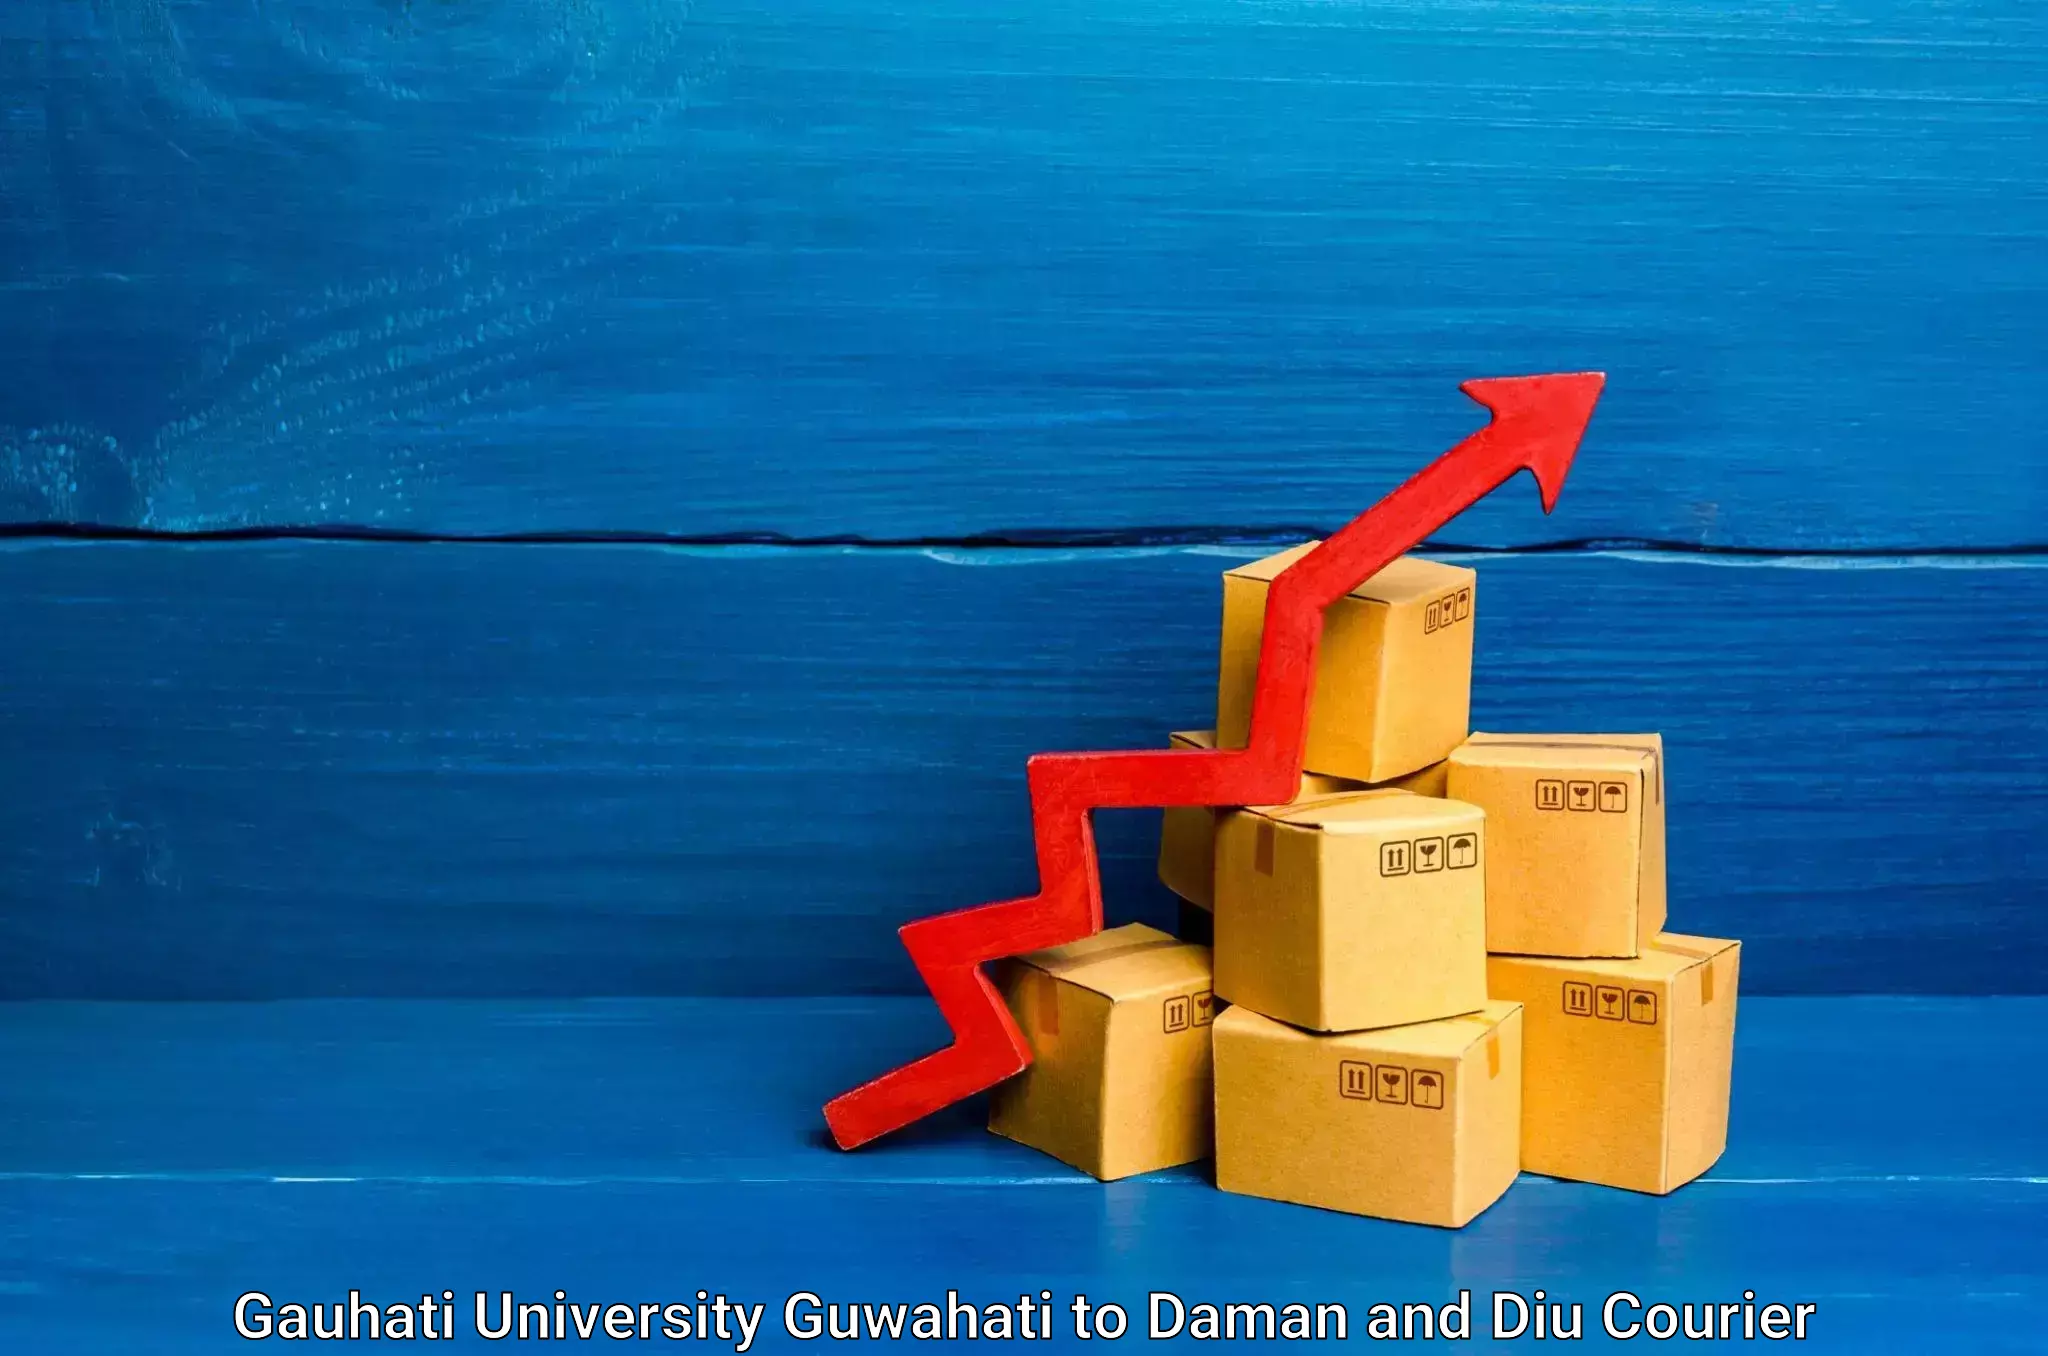 Express delivery capabilities Gauhati University Guwahati to Daman and Diu